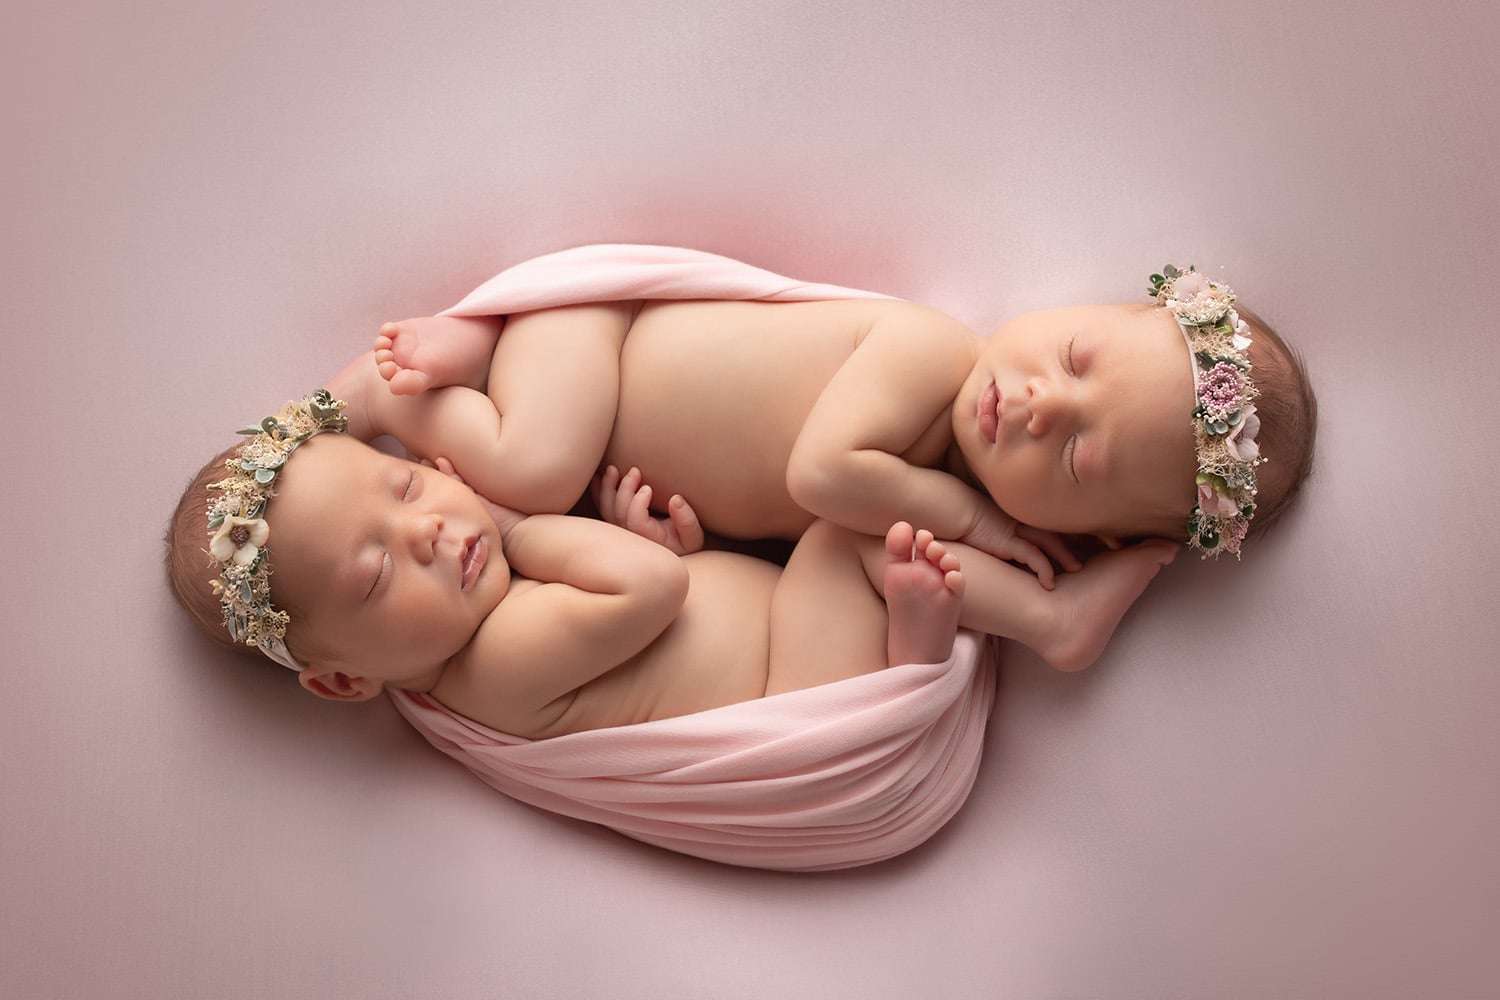 newborn photographer in rochester ny captures twin newborn girls sleeping together